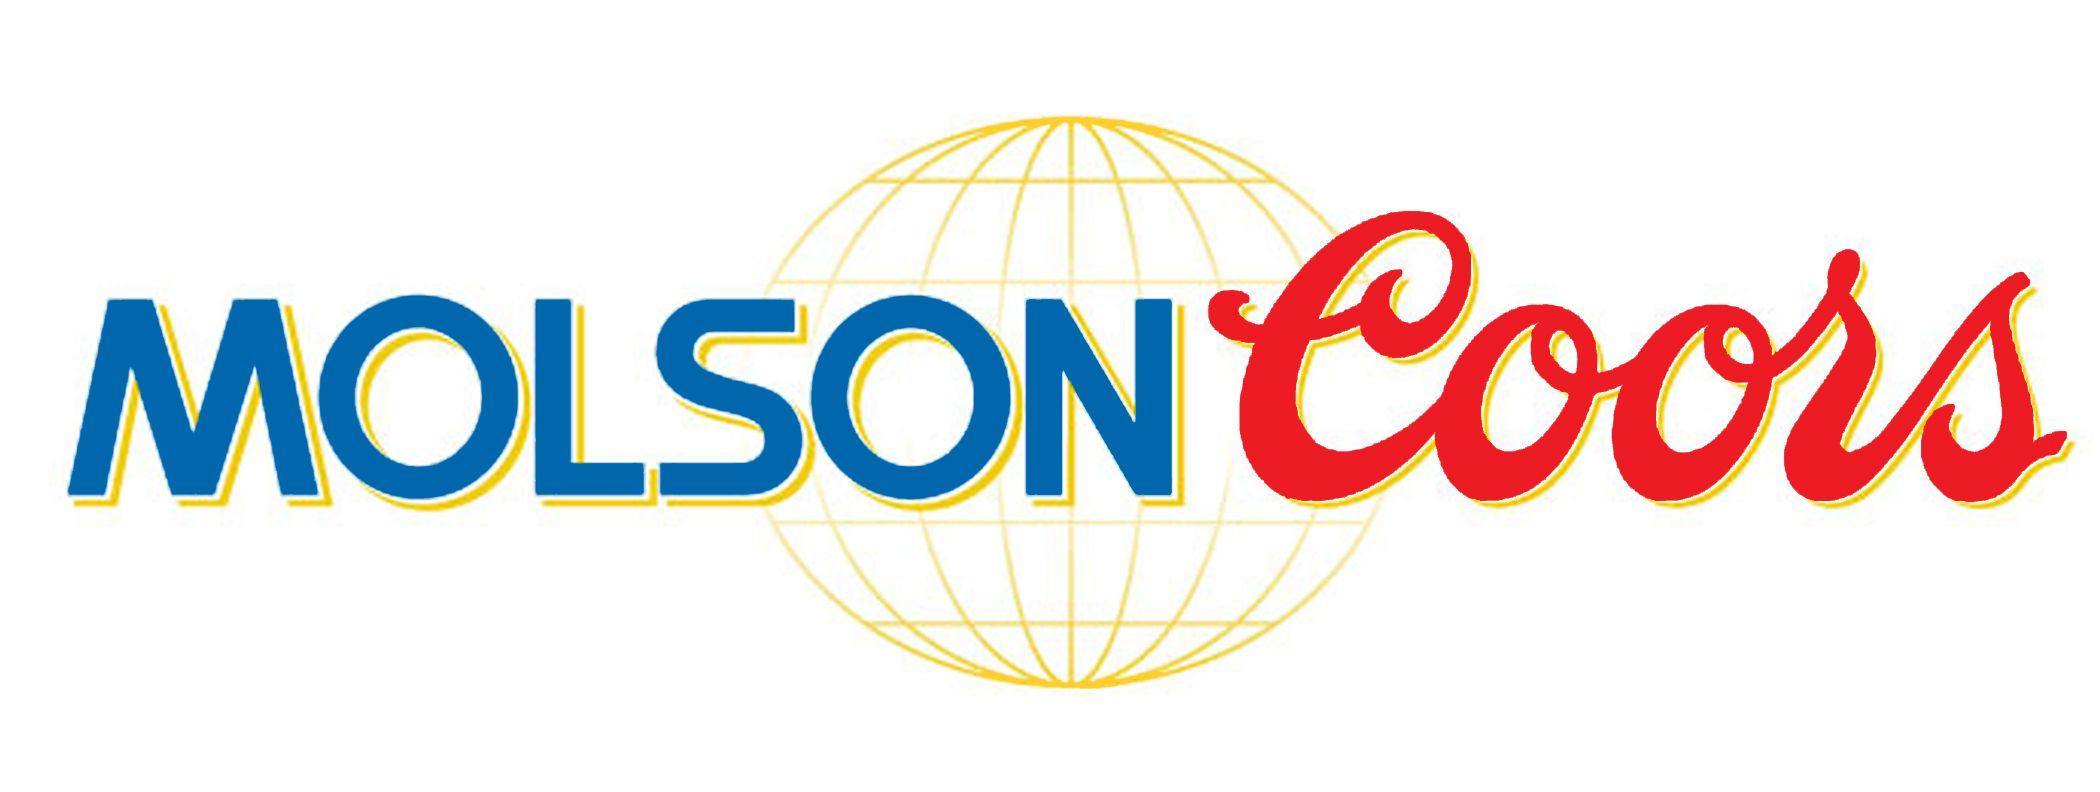 Molson Logo - Molson Coors Logo